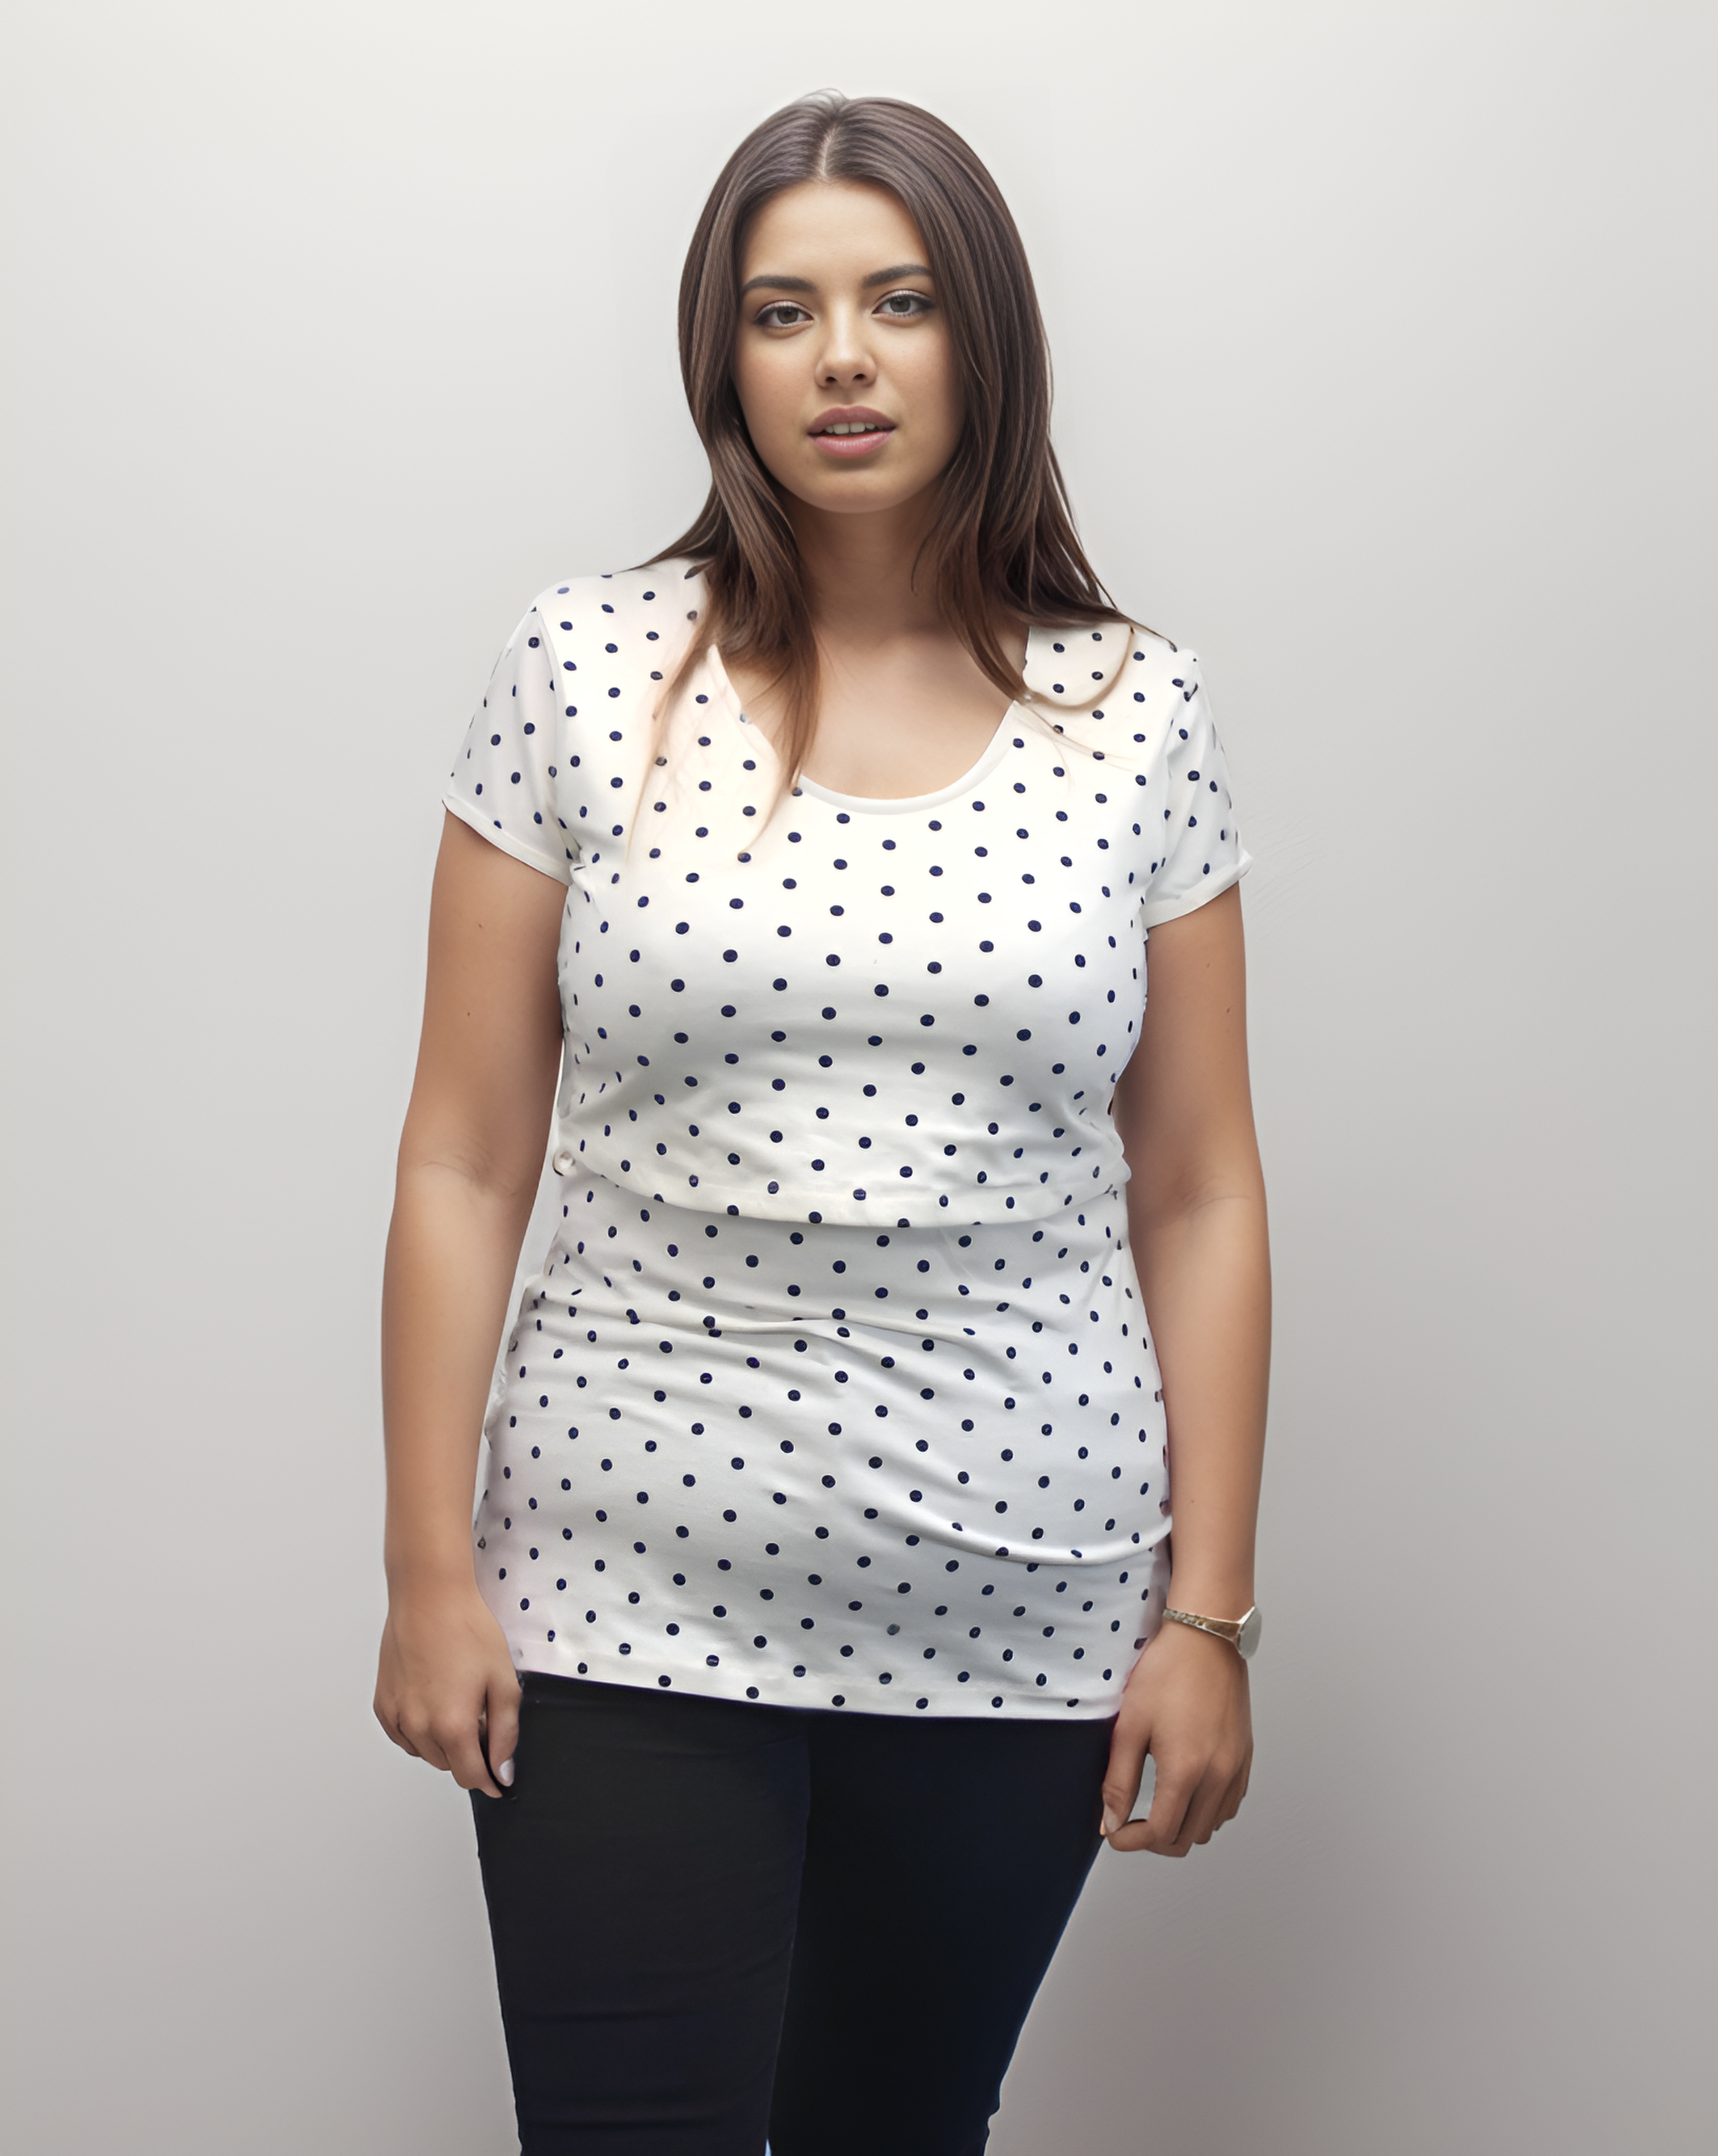 Bshirt Nursing short sleeve t-shirt in White/Black Spots